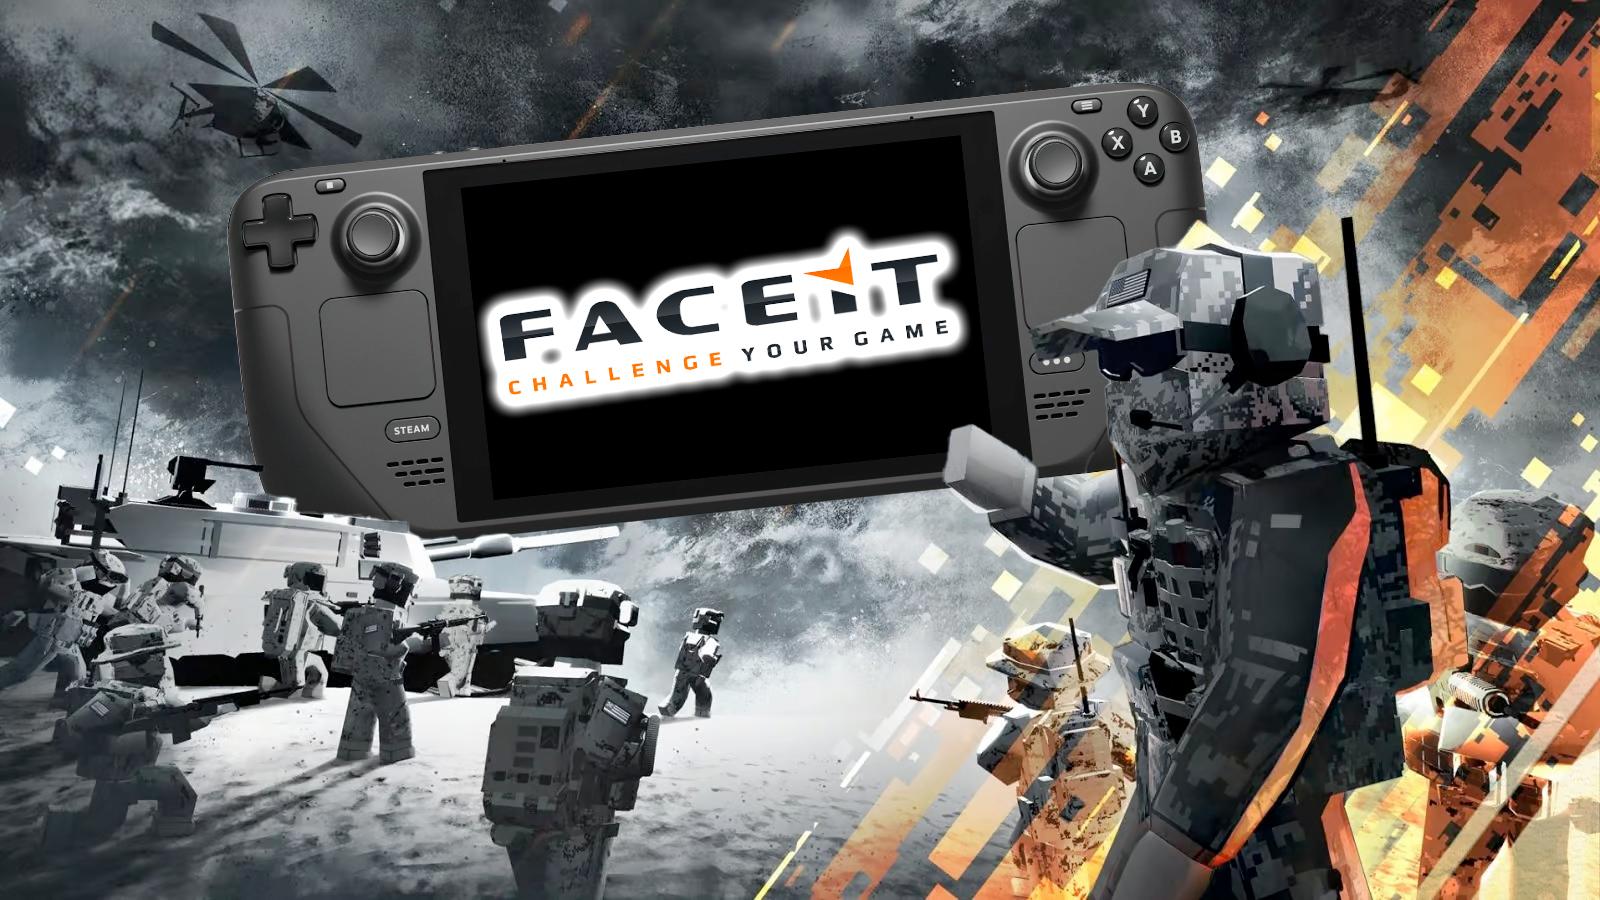 Battlebit Remastered art with a Steam Deck showing the FACEIT logo